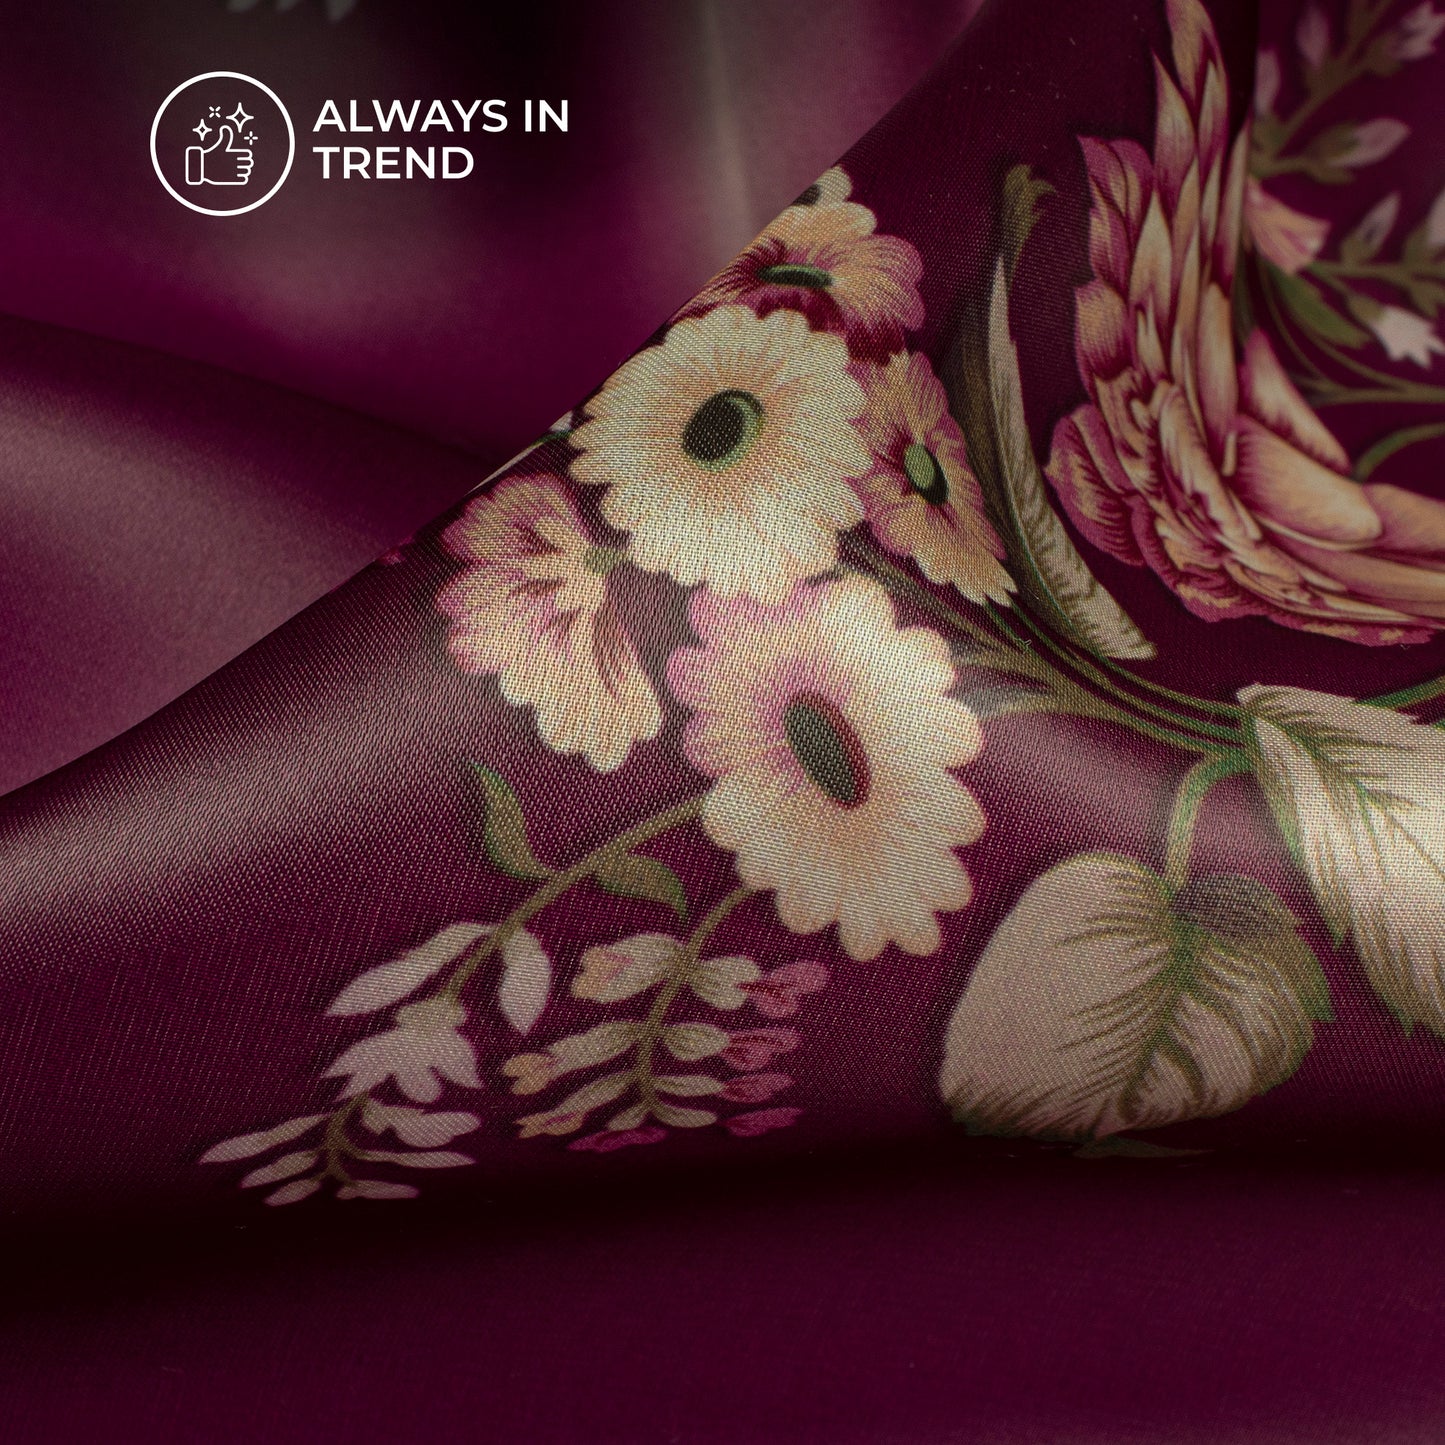 Attractive Purple Floral Digital Print Organza Satin Fabric